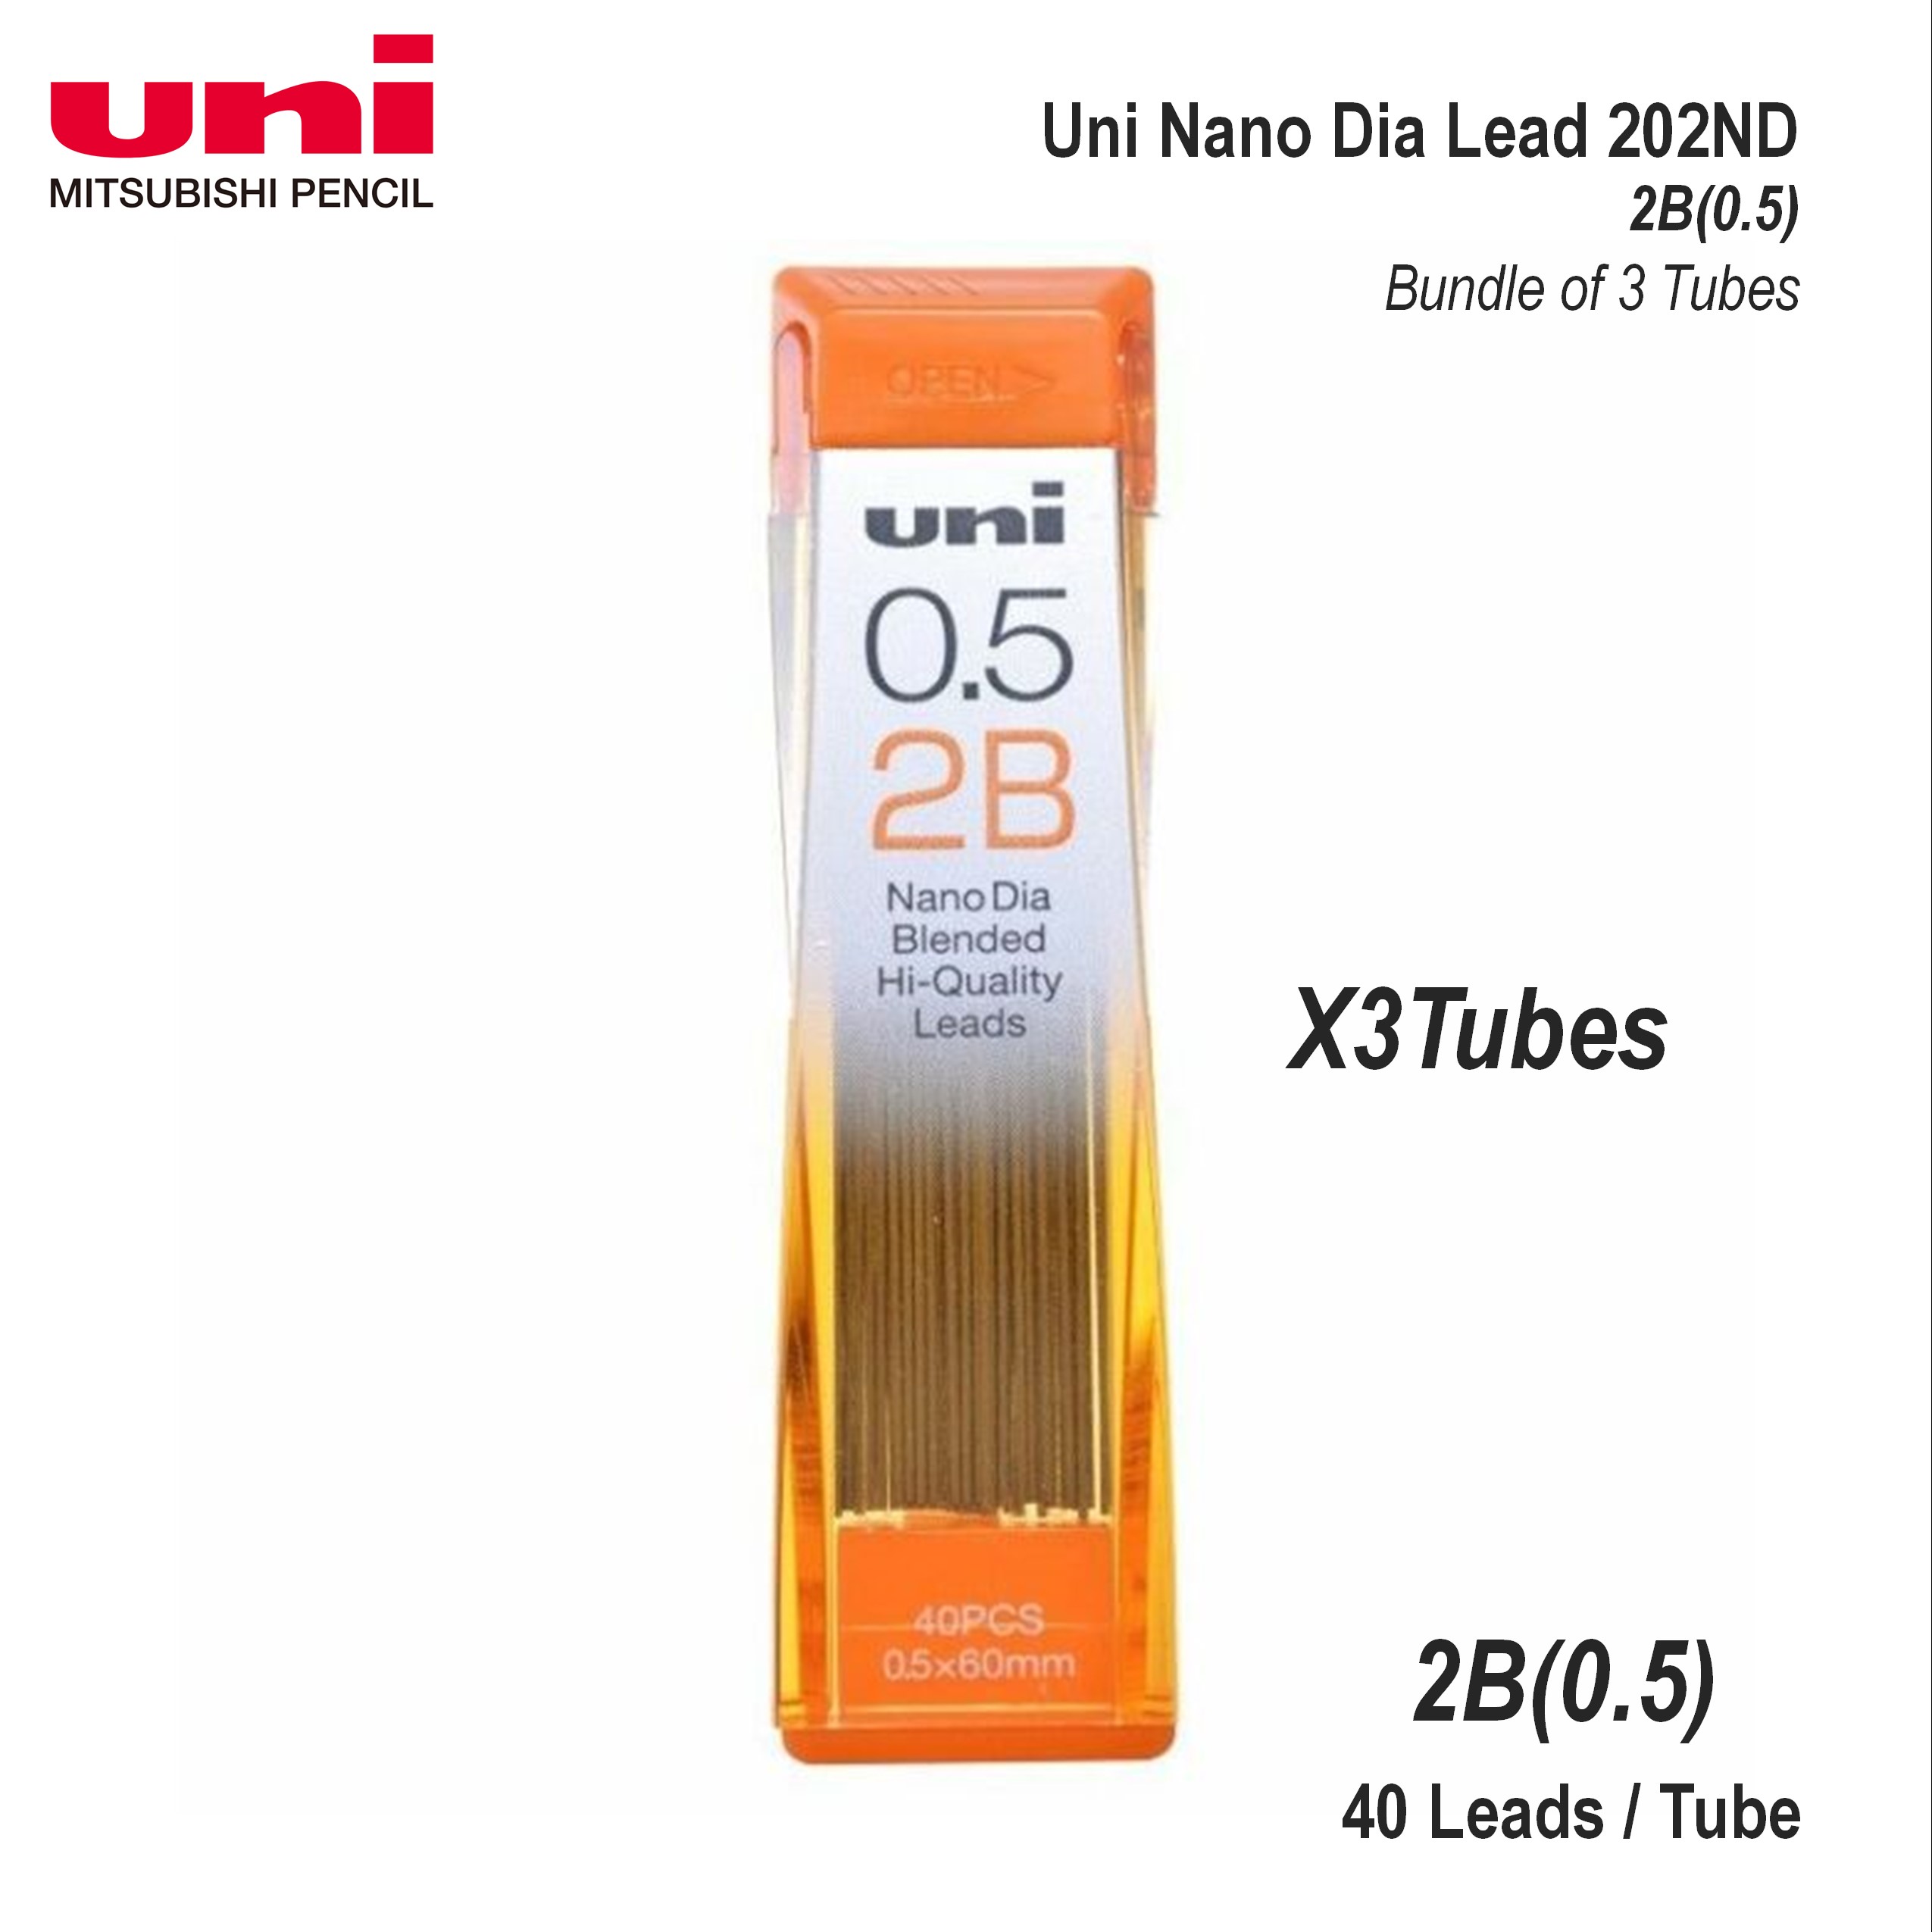 Uni Nano Dia Blended Hi-Quality 0.5mm B Leads 10 Packs Registered Shipping 